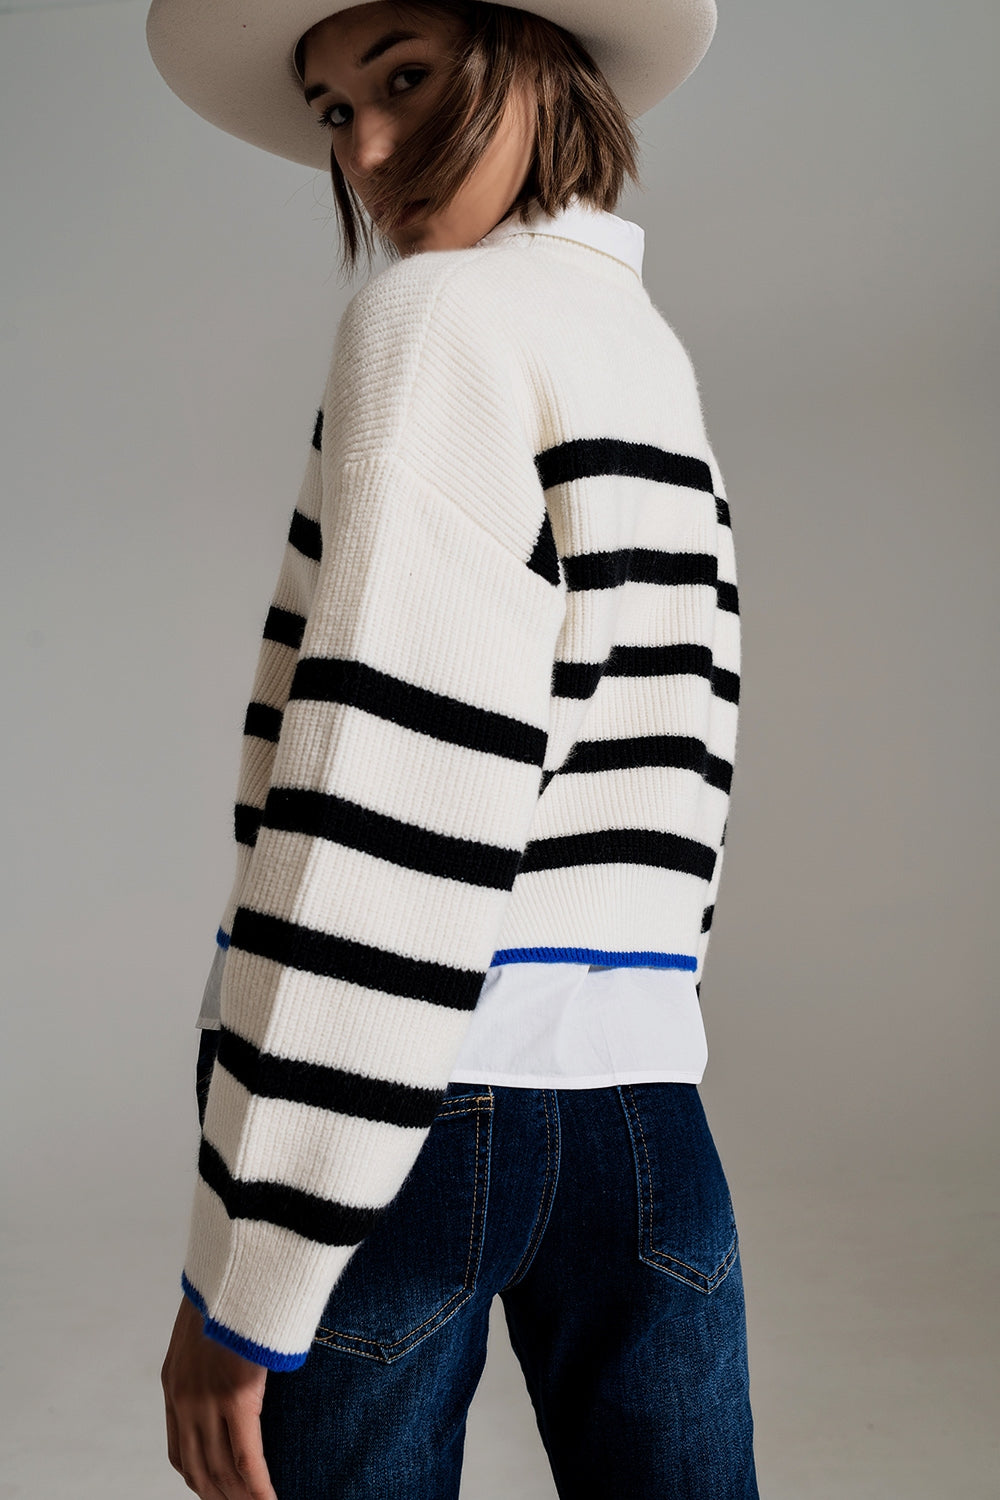 Black striped jumper with blue stripe detail on the bottom - Szua Store